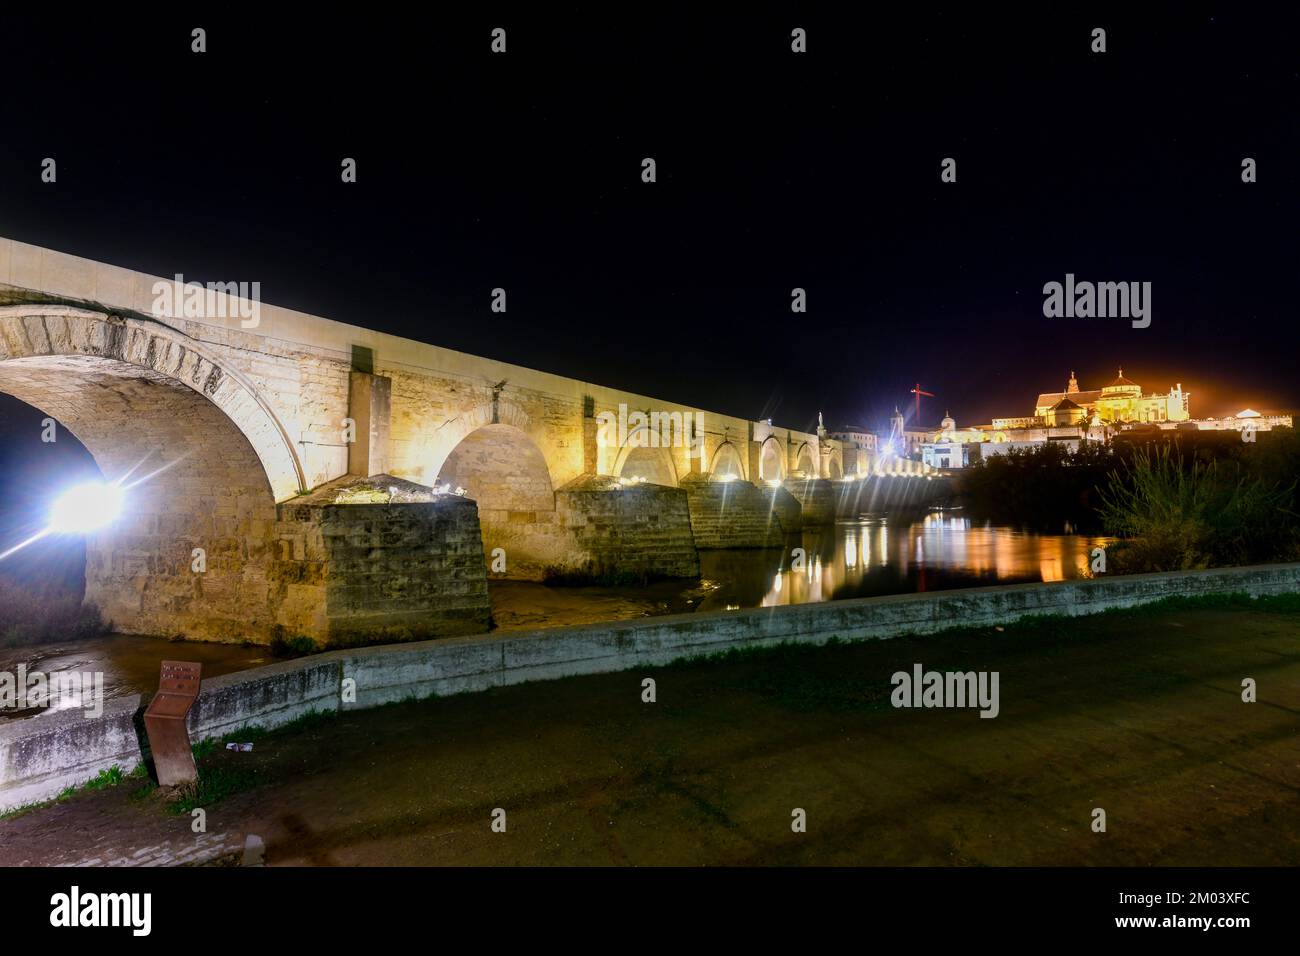 View of the Roman Bridge, a stone bridge that spans the river Guadalquivir in Cordoba, Spain at night. Stock Photo